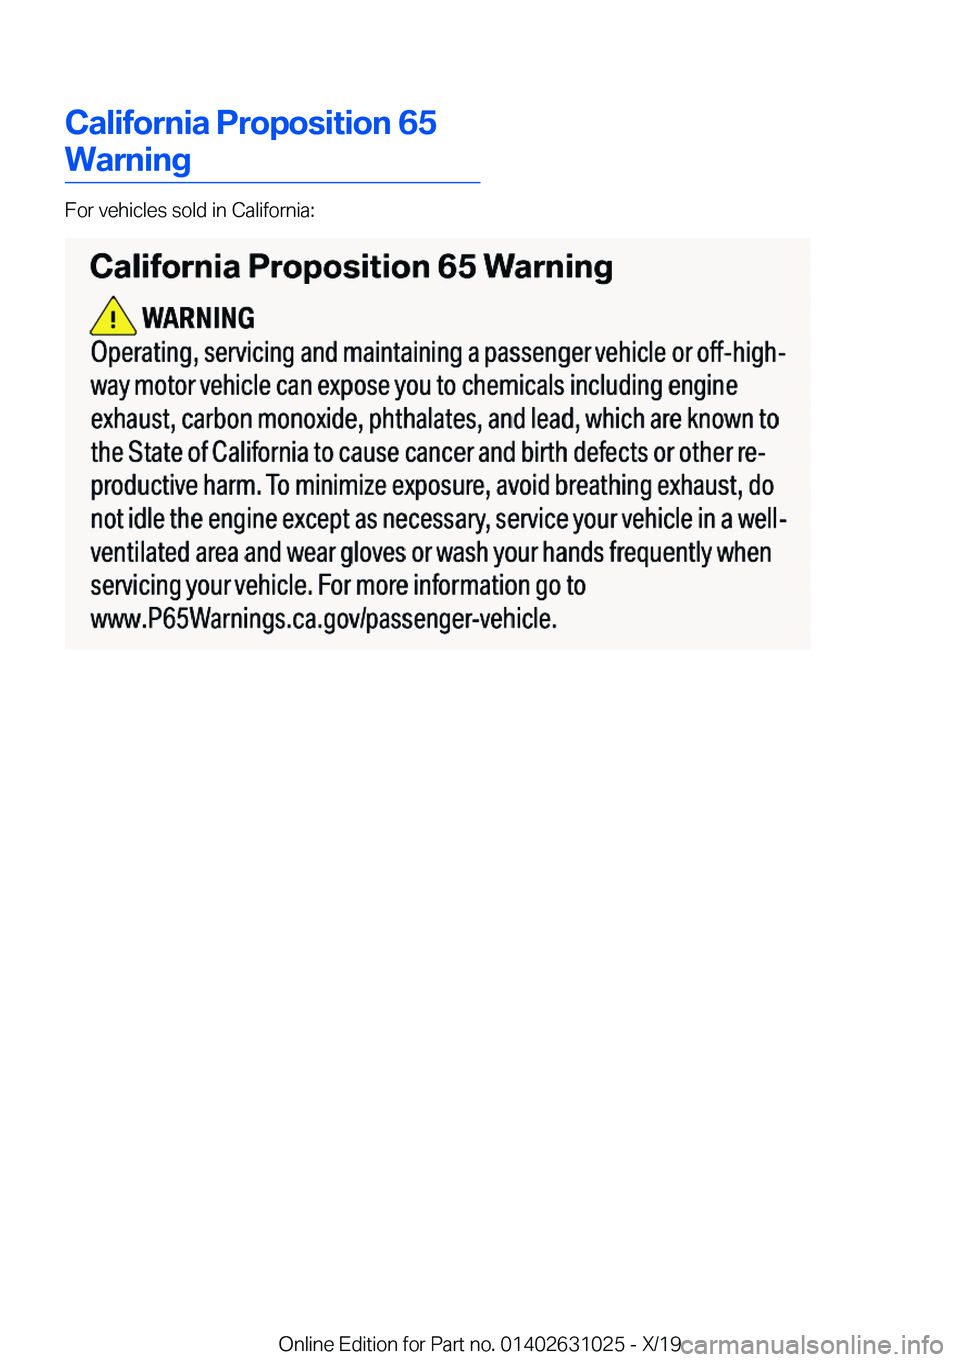 BMW 2 SERIES GRAN COUPE 2020  Owners Manual �C�a�l�i�f�o�r�n�i�a��P�r�o�p�o�s�i�t�i�o�n��6�5
�W�a�r�n�i�n�g
�F�o�r��v�e�h�i�c�l�e�s��s�o�l�d��i�n��C�a�l�i�f�o�r�n�i�a�:
�O�n�l�i�n�e��E�d�i�t�i�o�n��f�o�r��P�a�r�t��n�o�.��0�1�4�0�2�6�